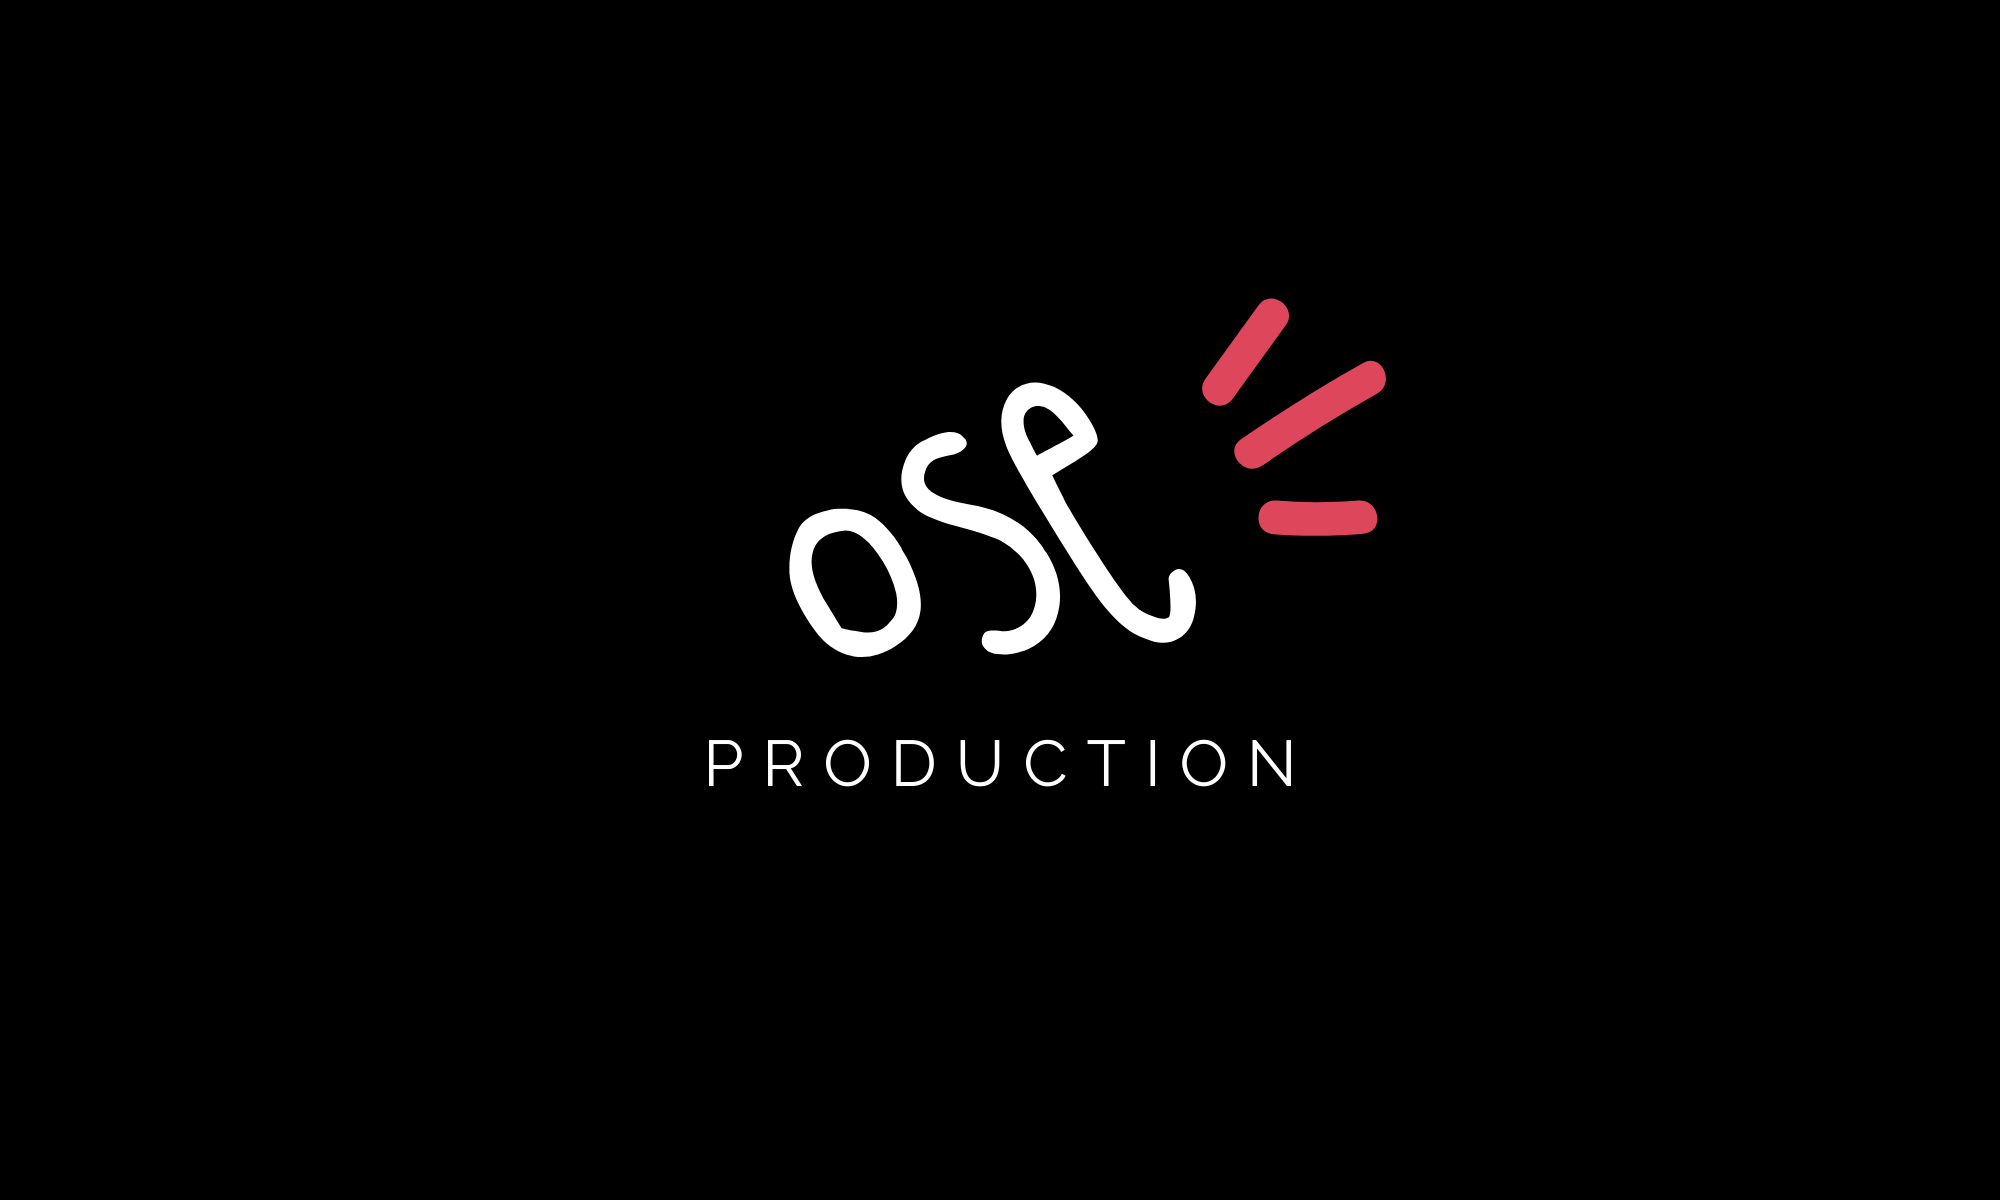 Ose Production